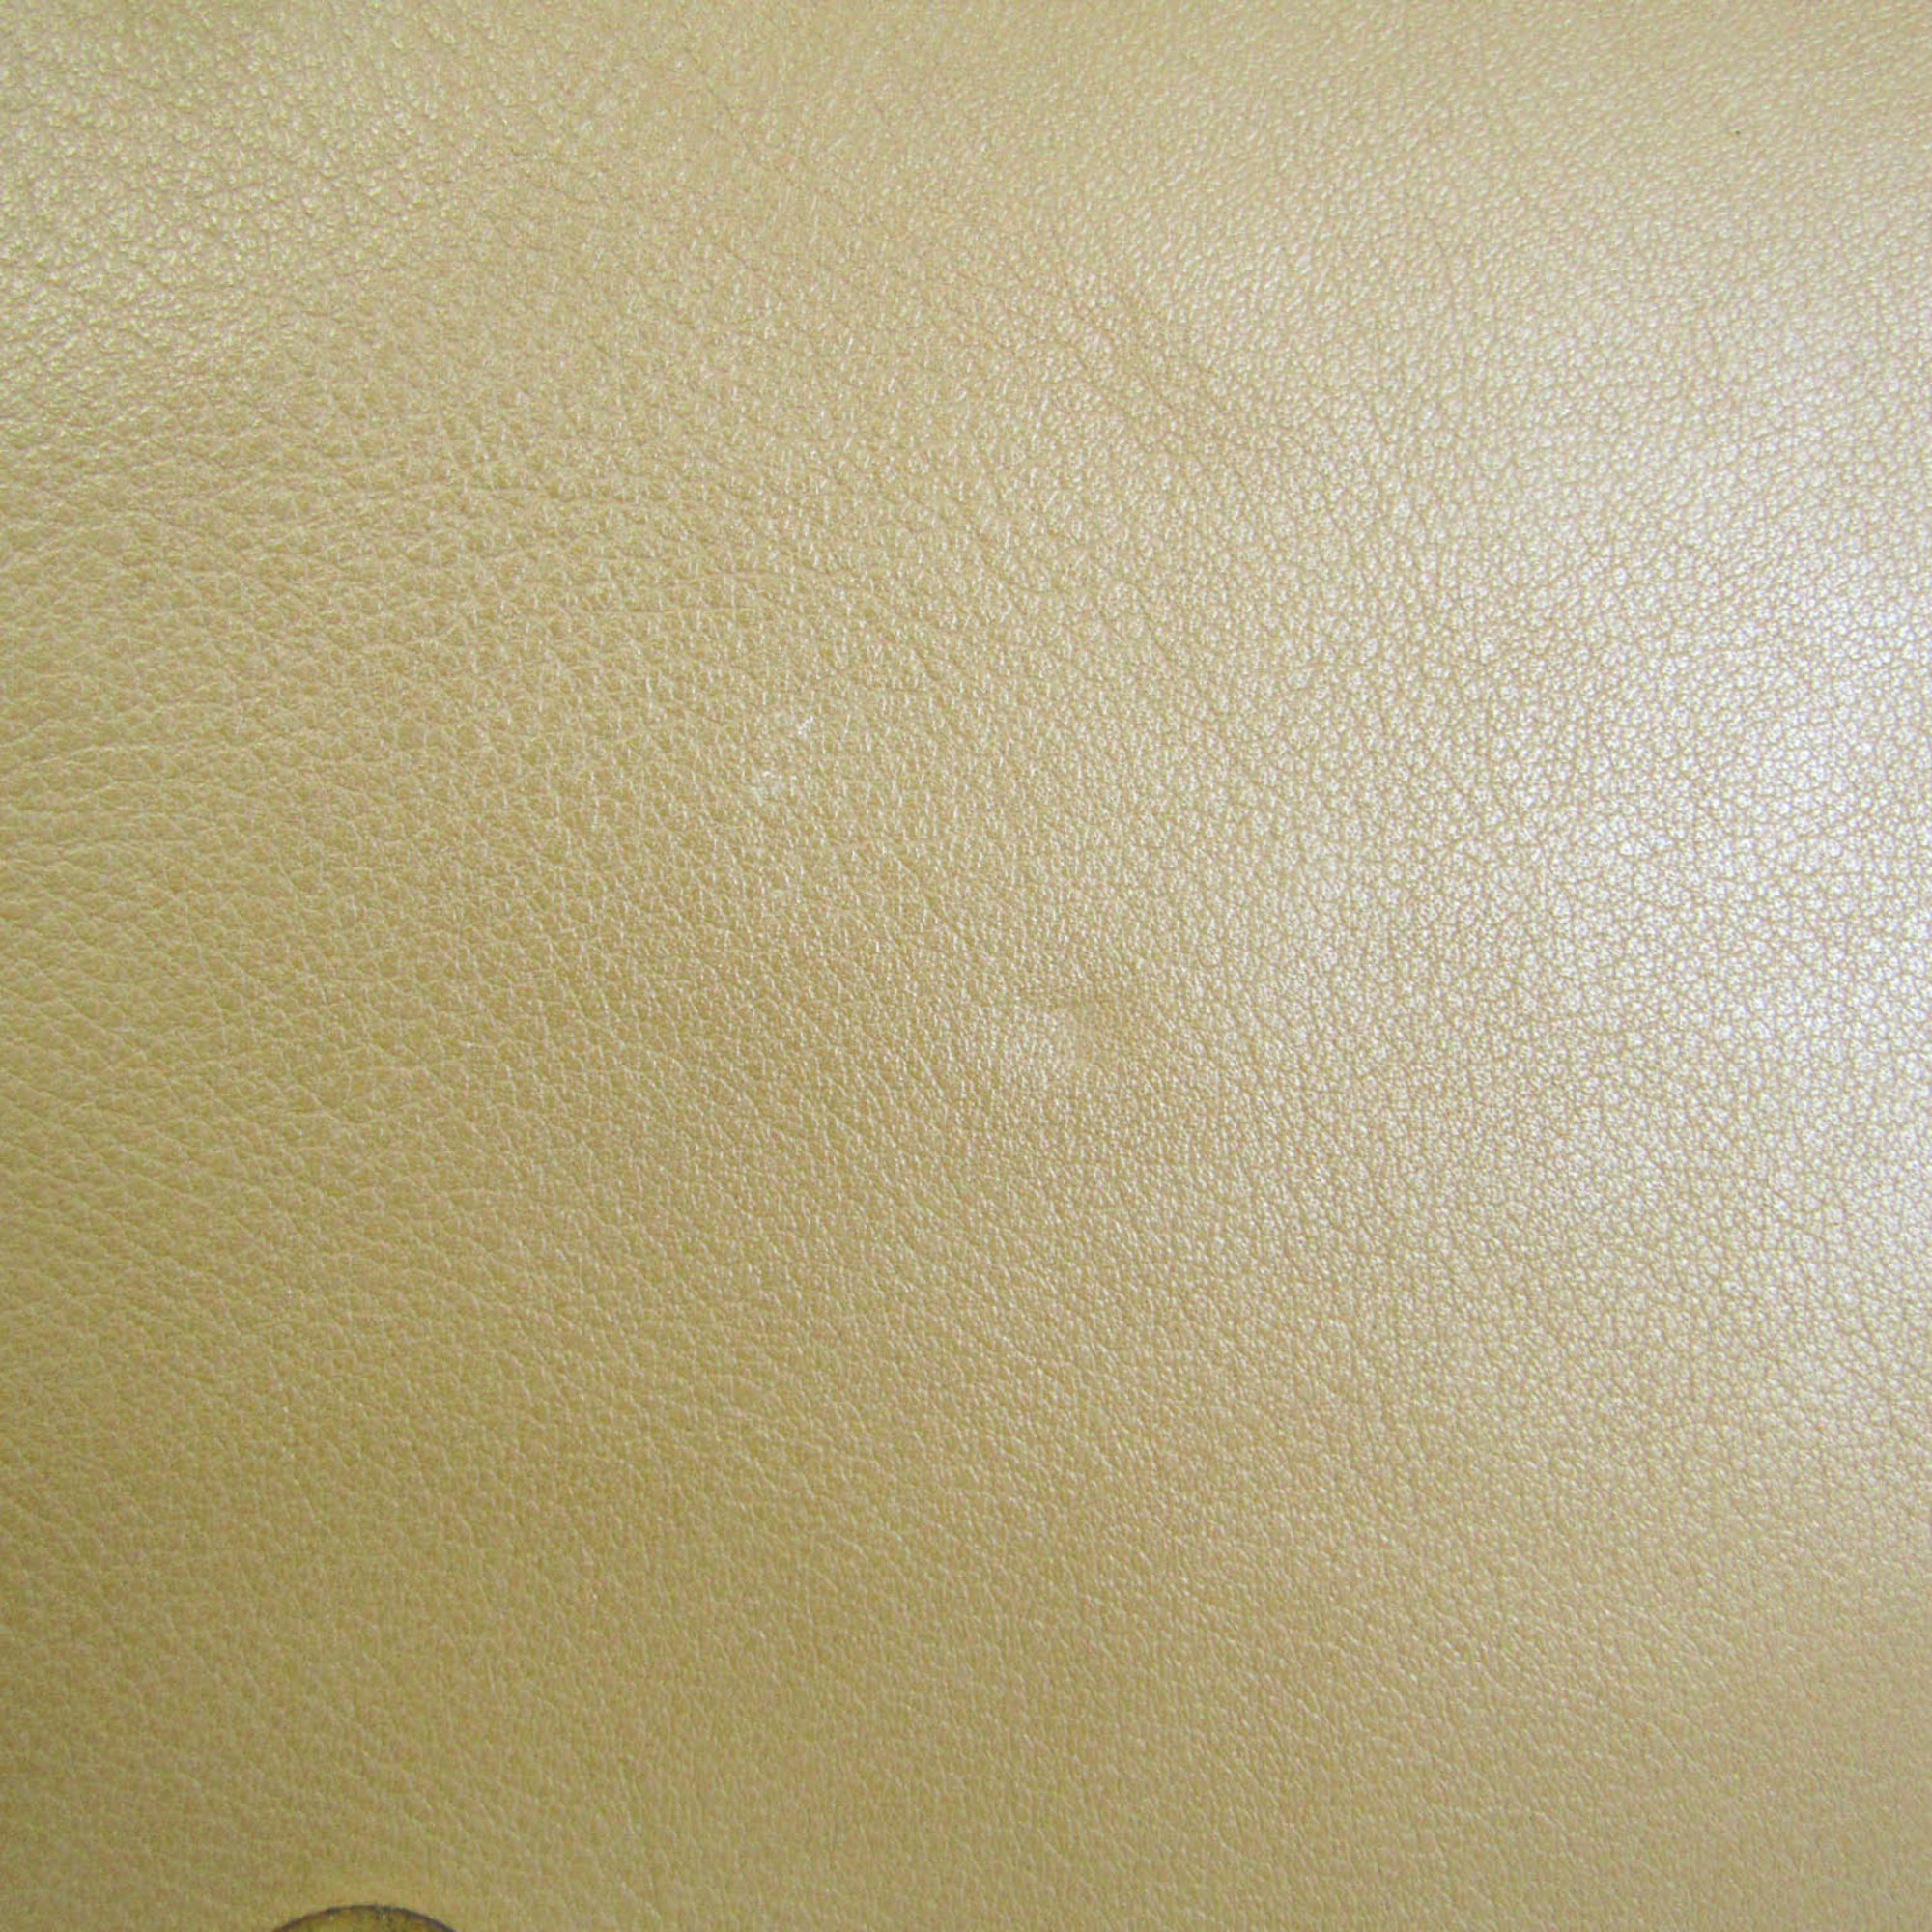 J&M Davidson Women's Leather Handbag Brown,Camel